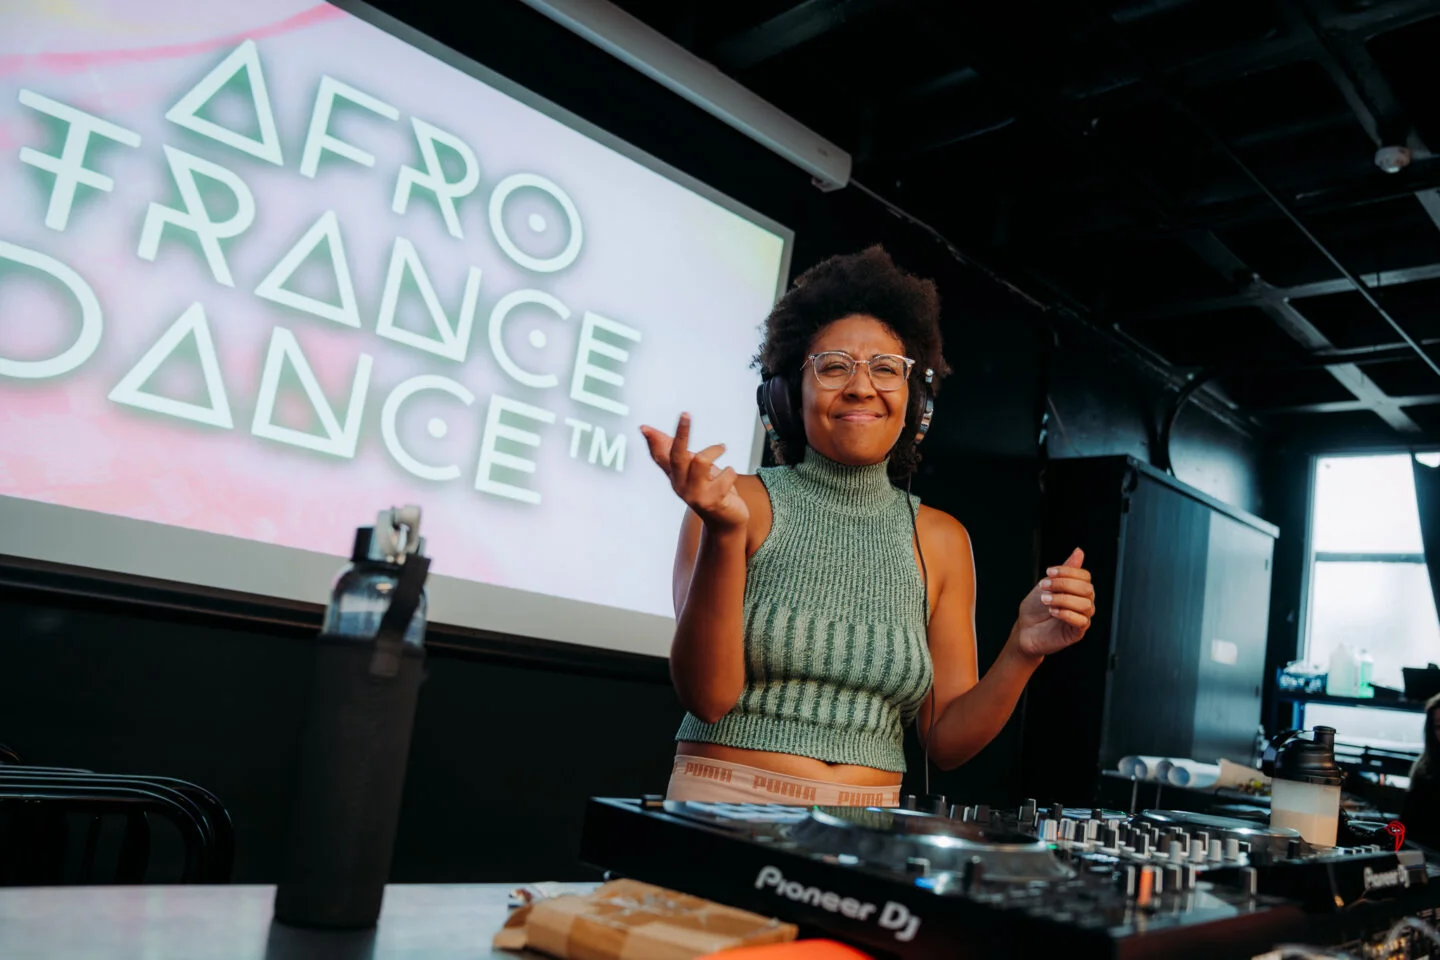 Afro Trance Dance™